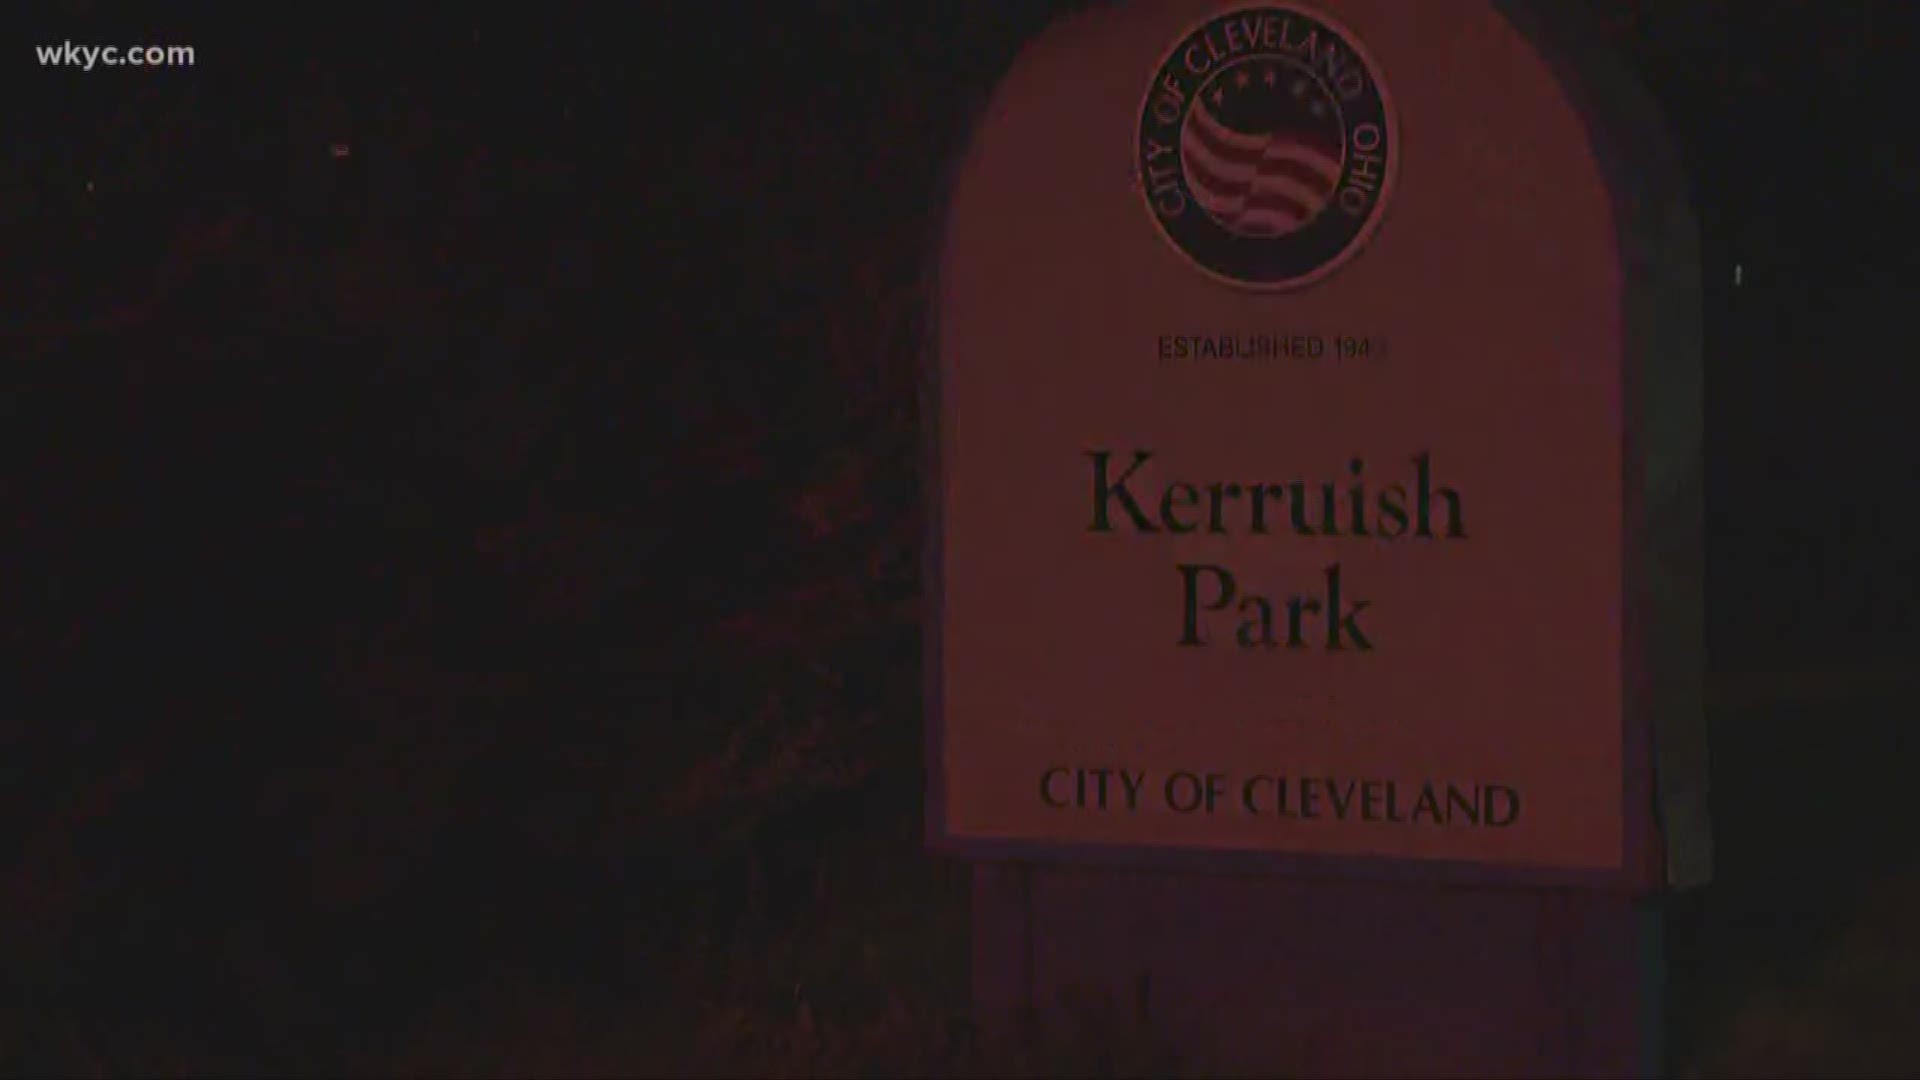 Three people were shot at Kerruish Park Sunday night.